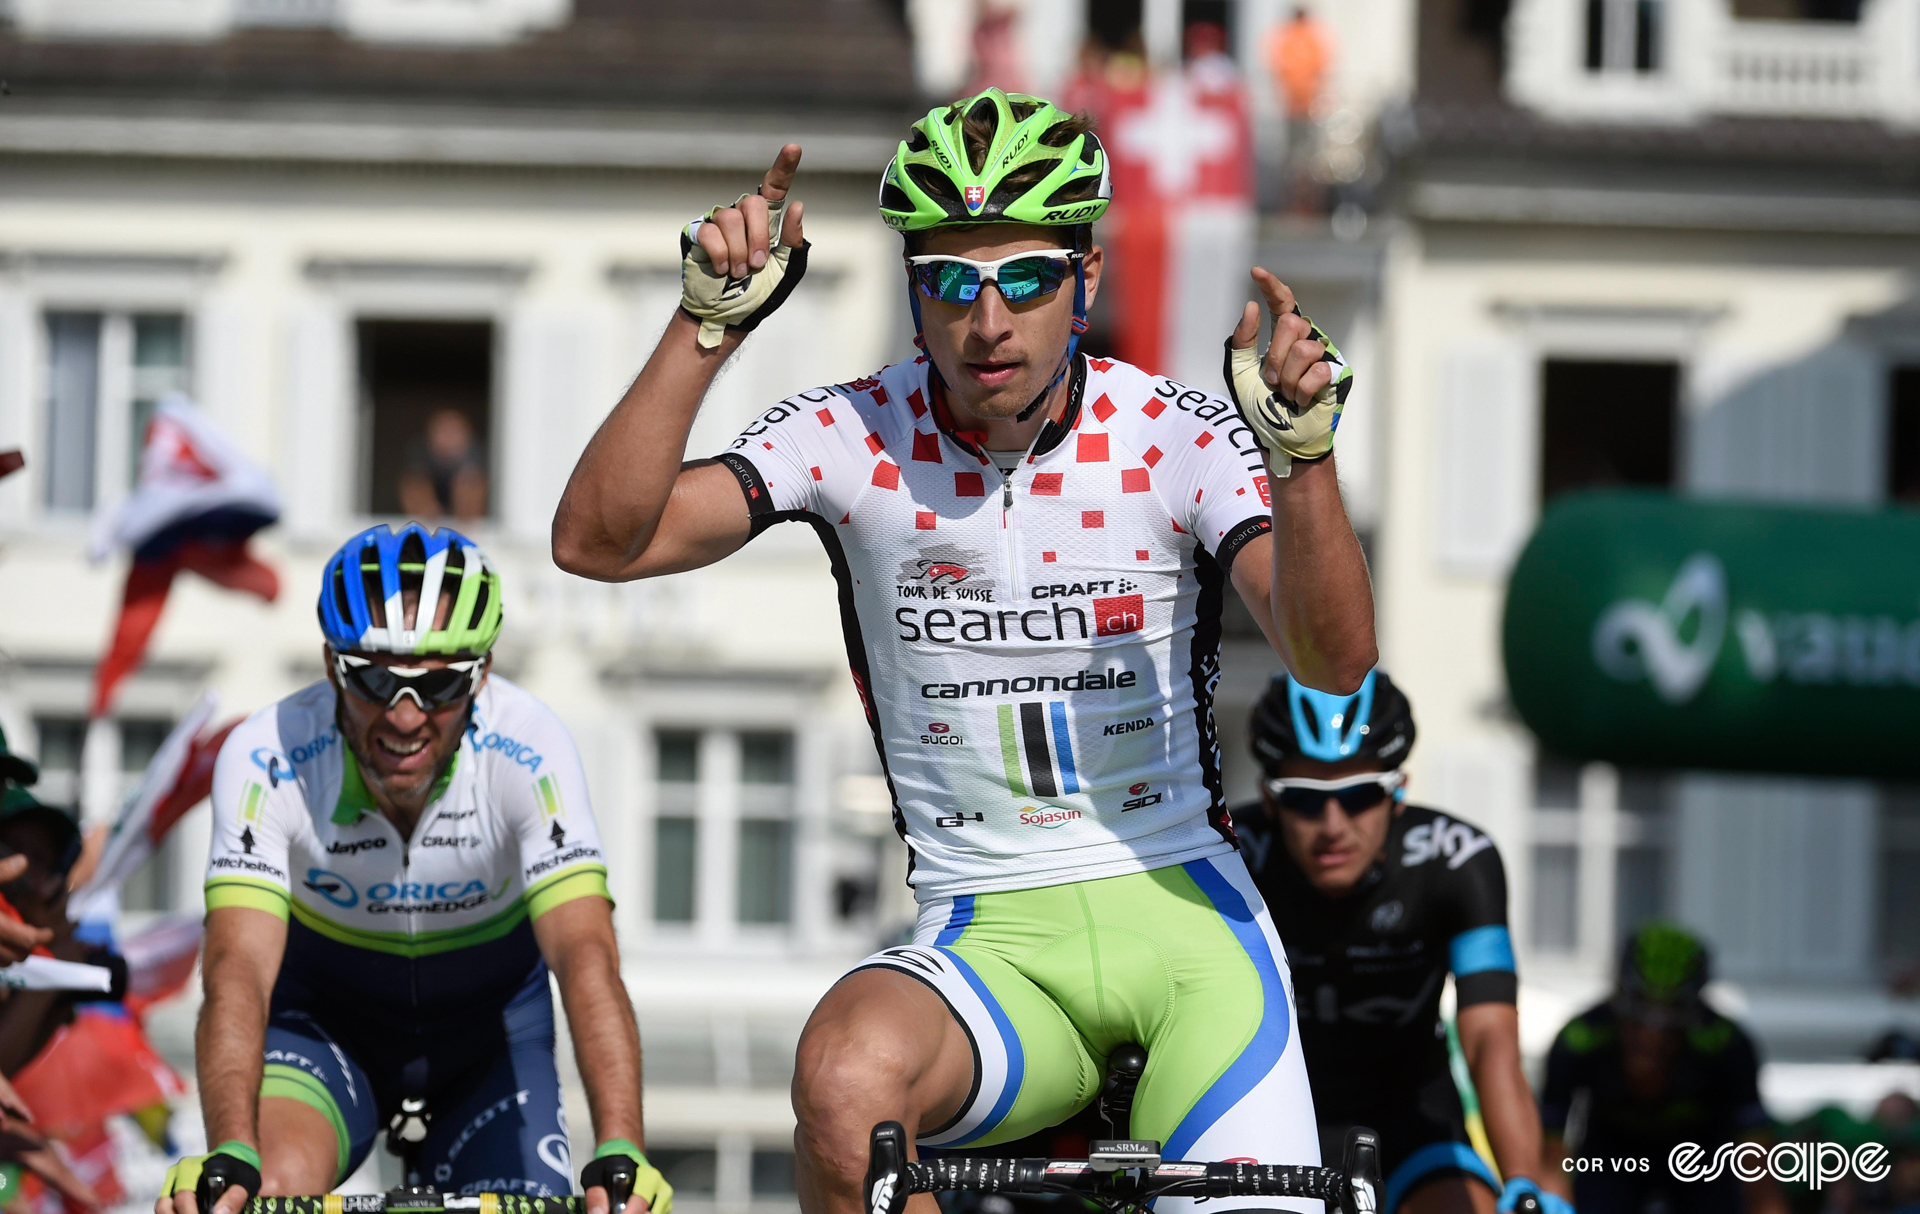 Peter Sagan celebrates winning a stage at the 2014 Tour de Suisse.